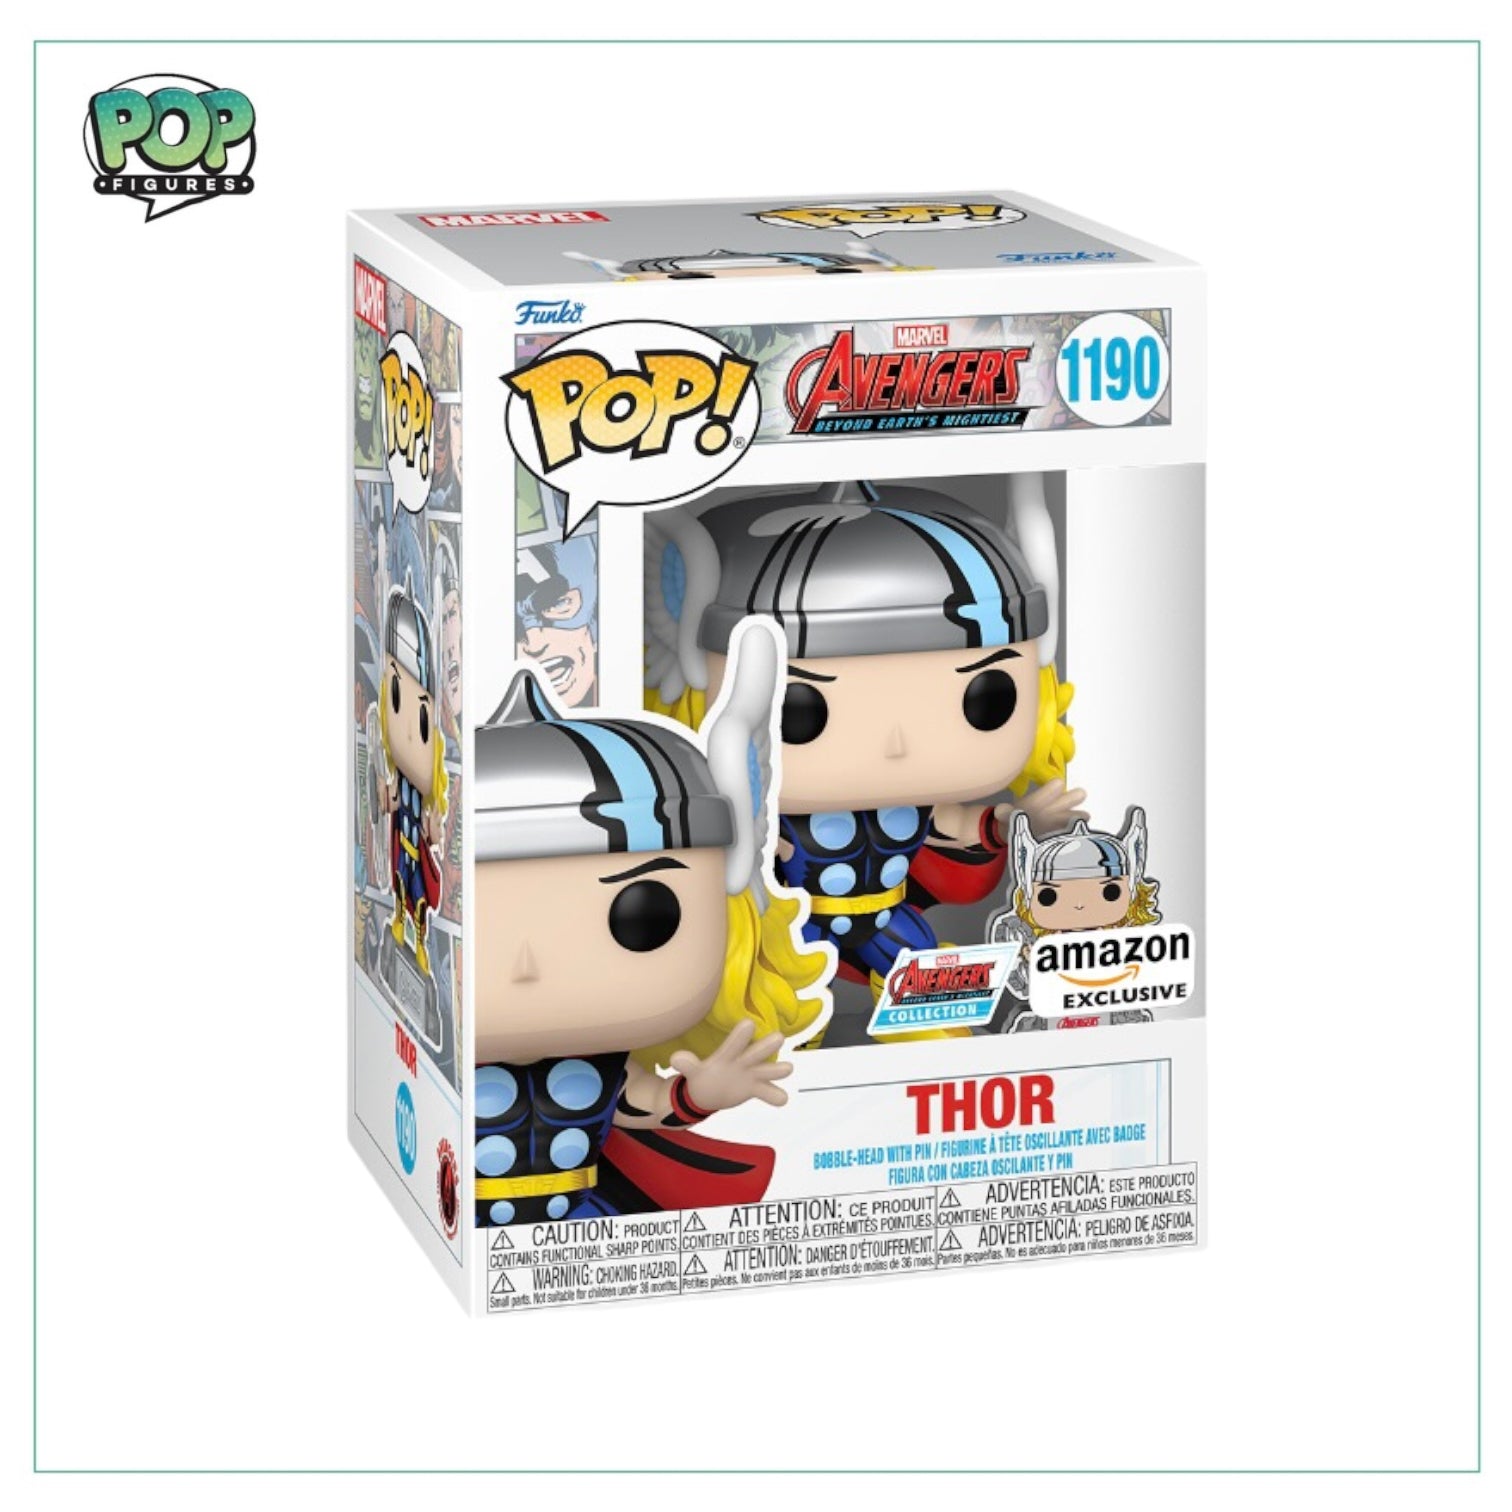 Thor #1190 Funko Pop! - Avengers Beyond Earth's Mightiest - Amazon Exclusive